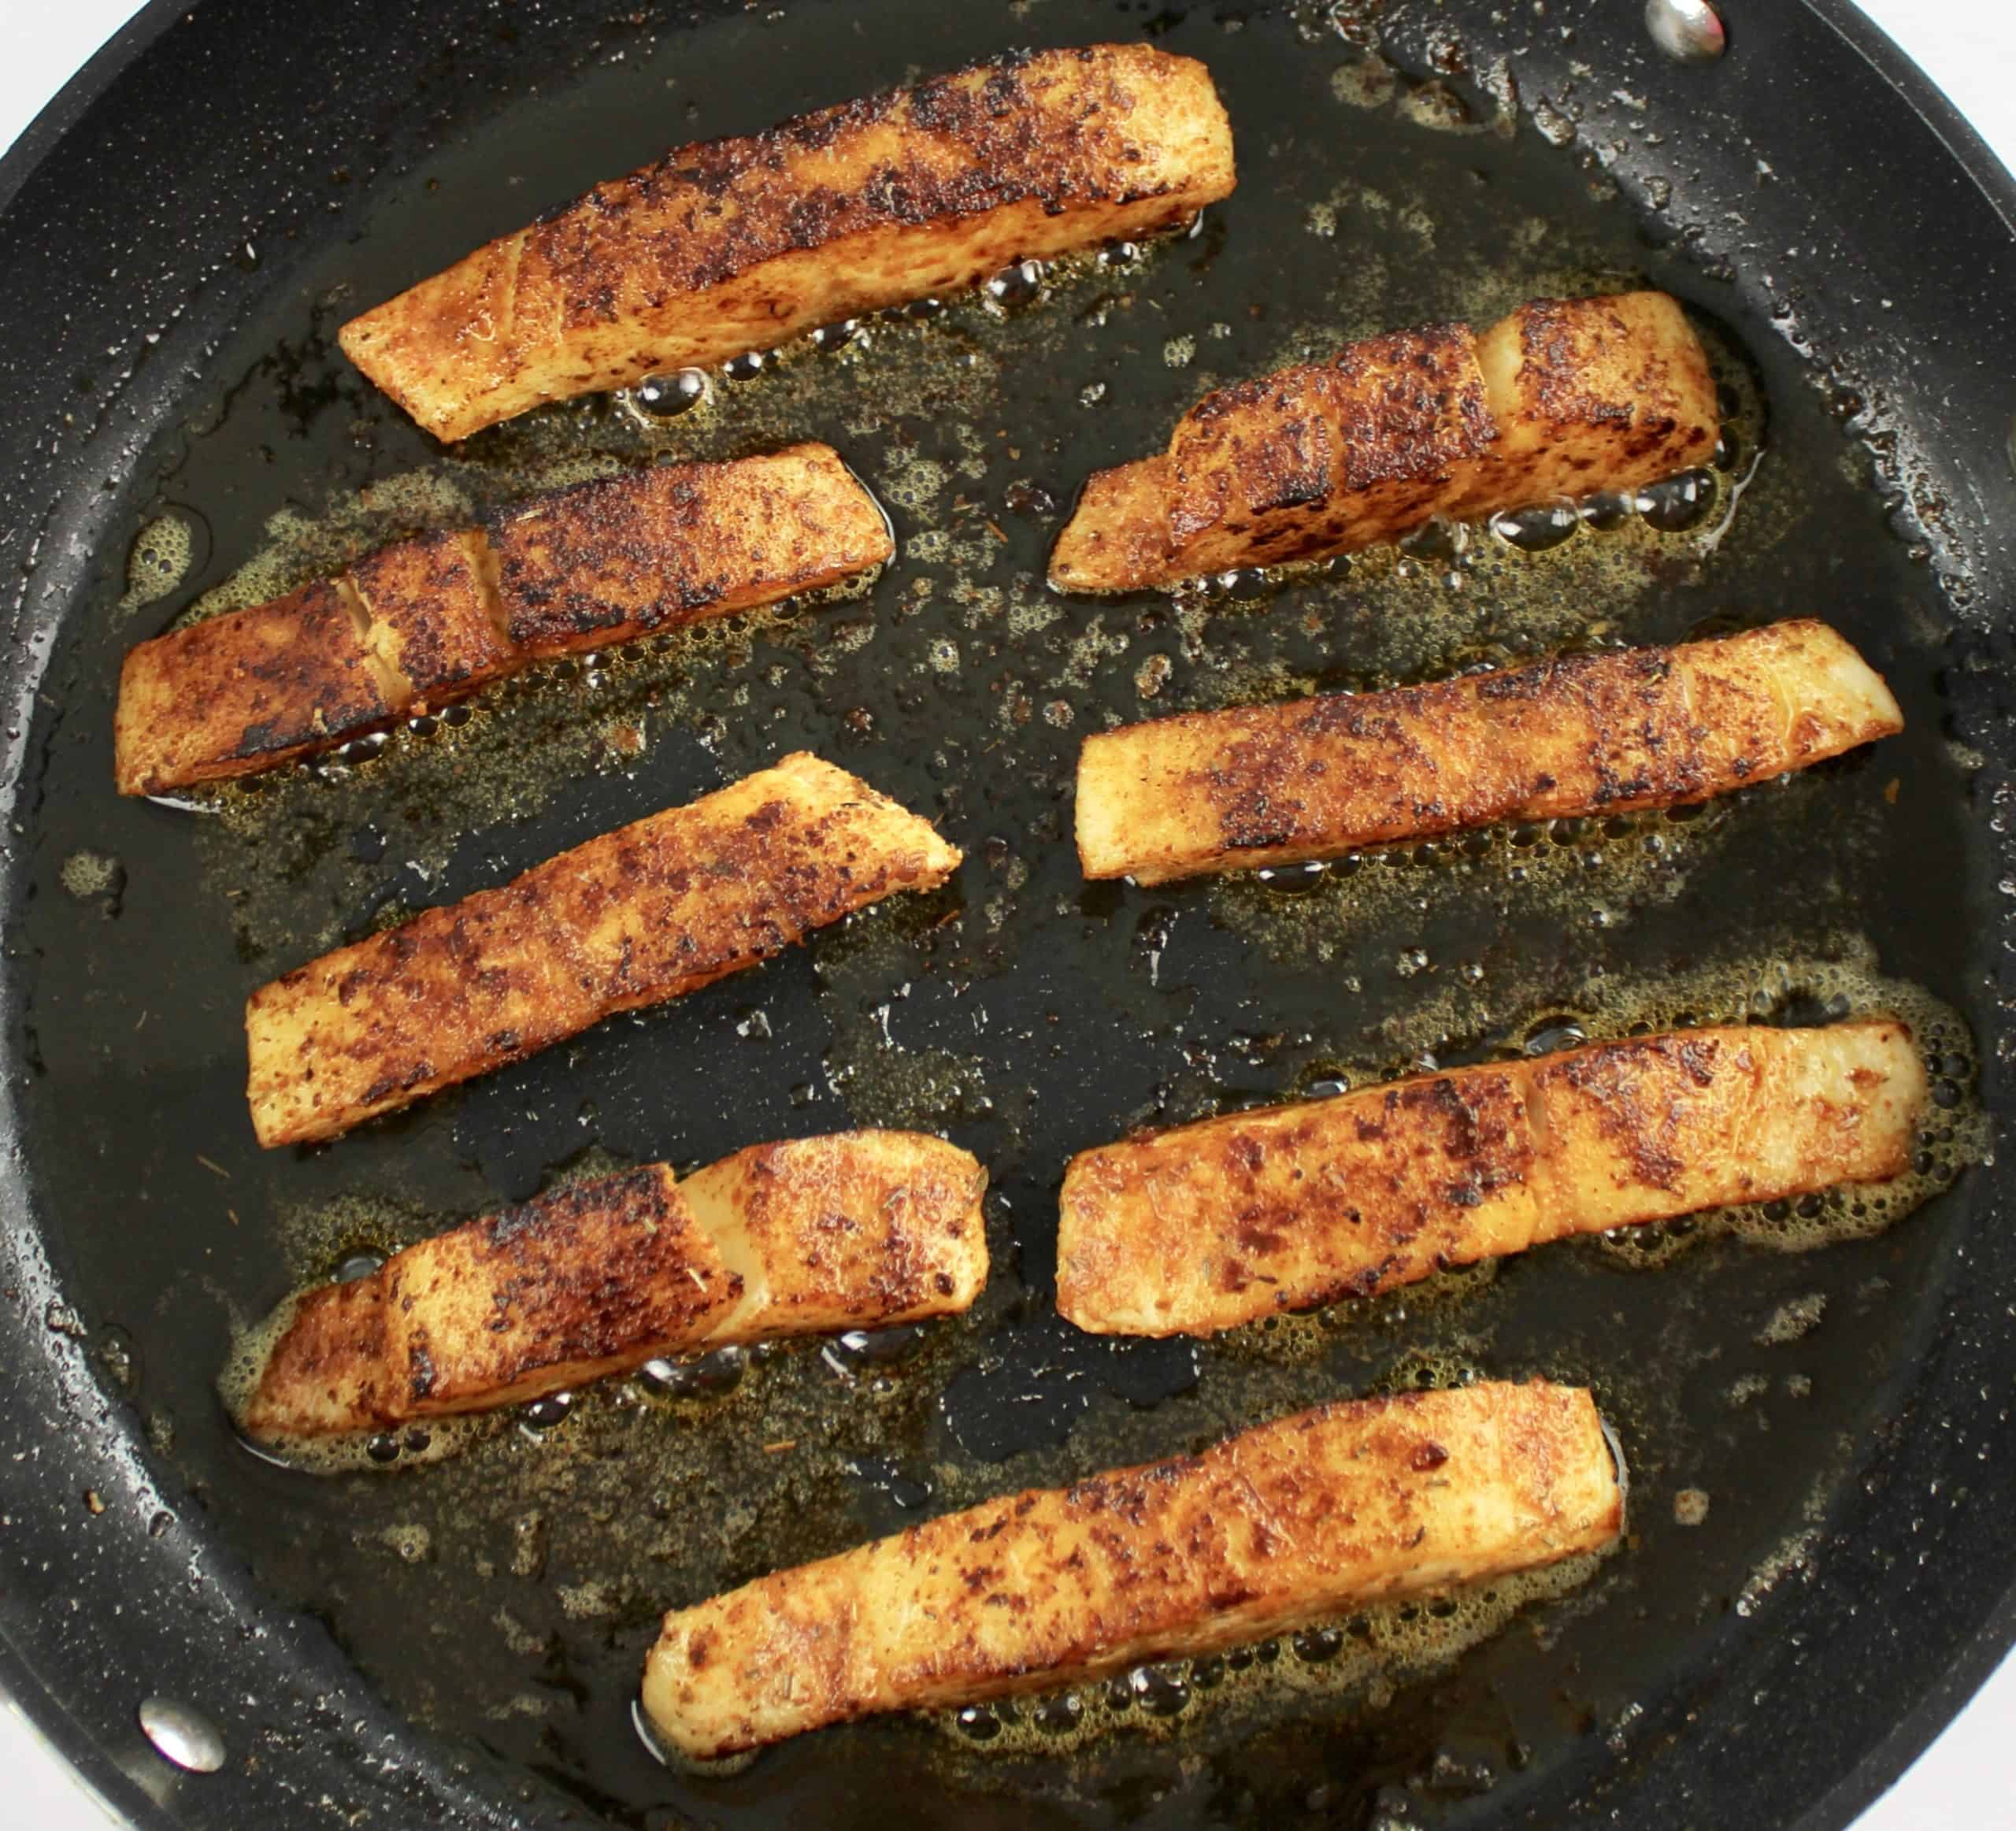 8 strips of cooked mahi mahi with blackening seasoning in skillet